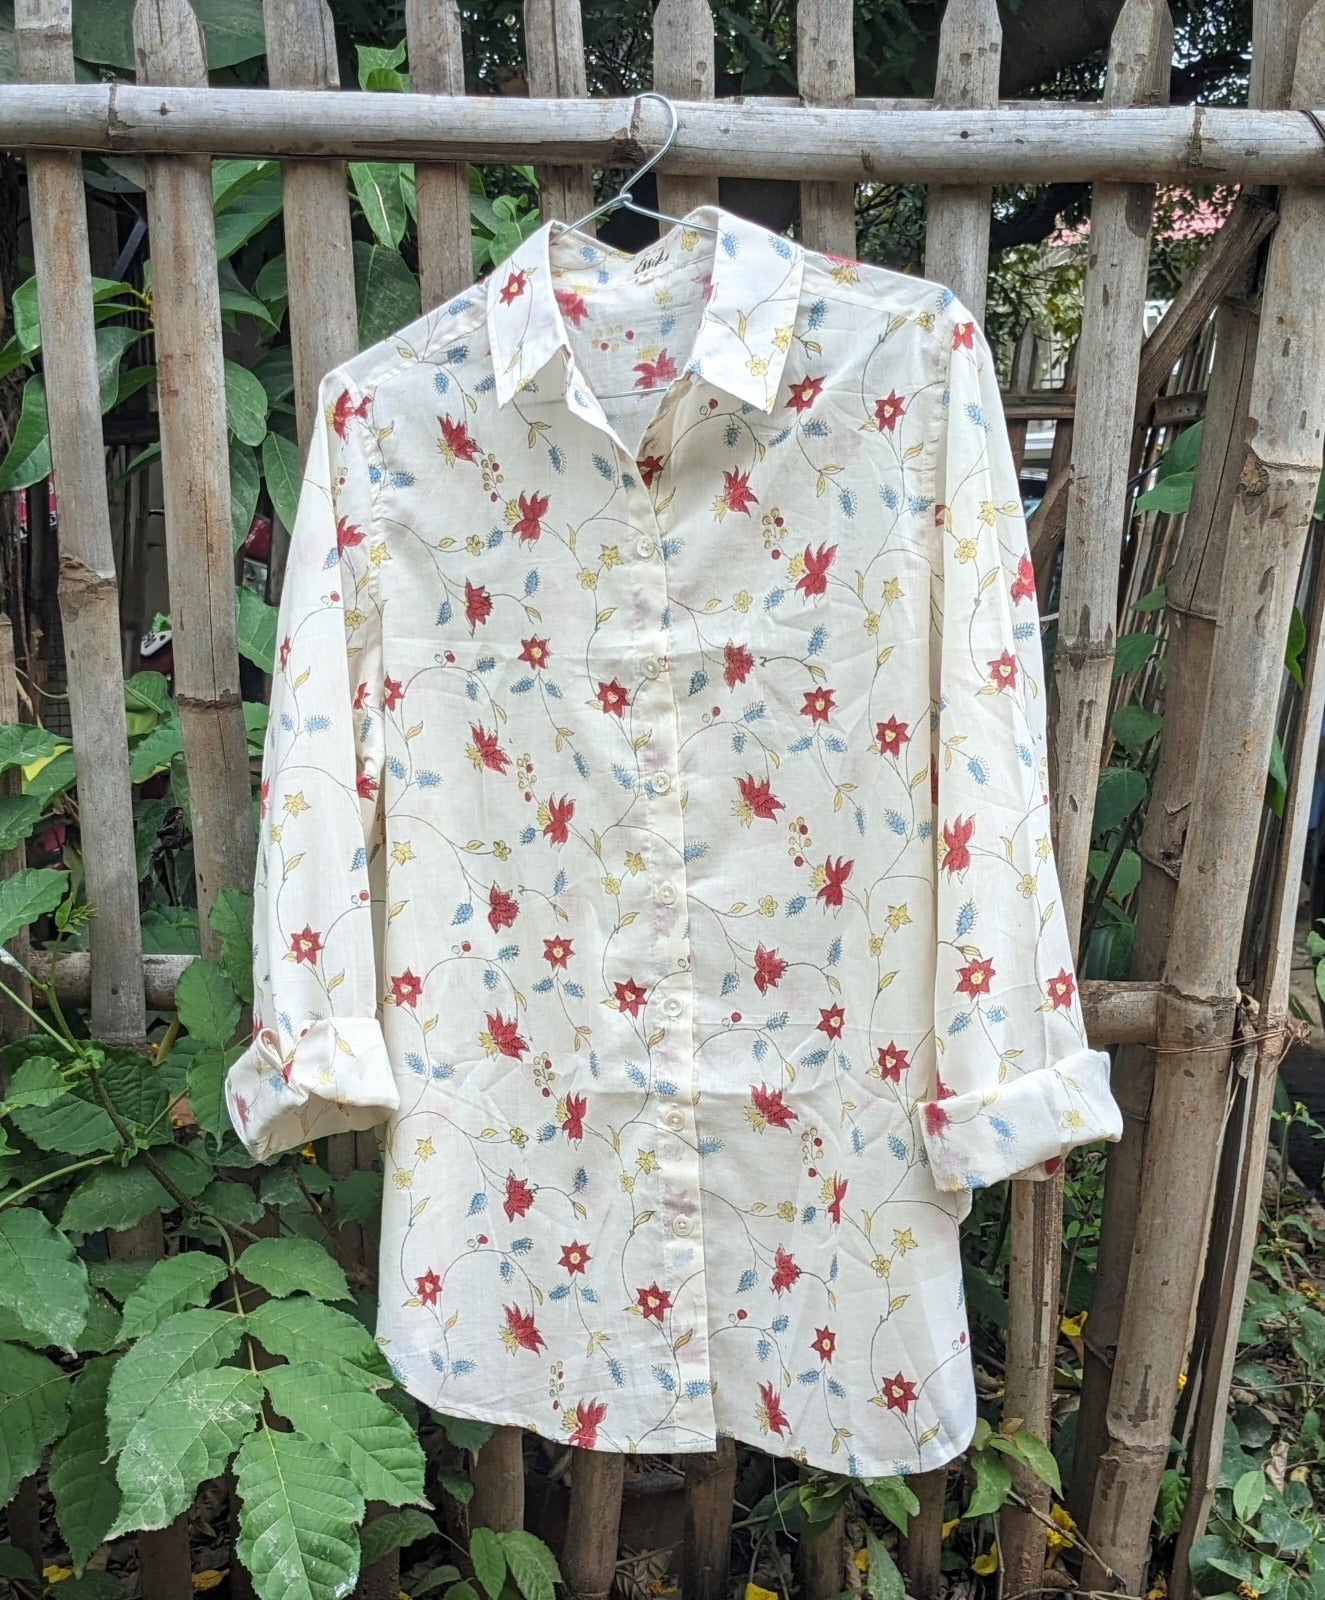 Cotton Full Sleeves Regular Shirt - Front Image -Poppy Red